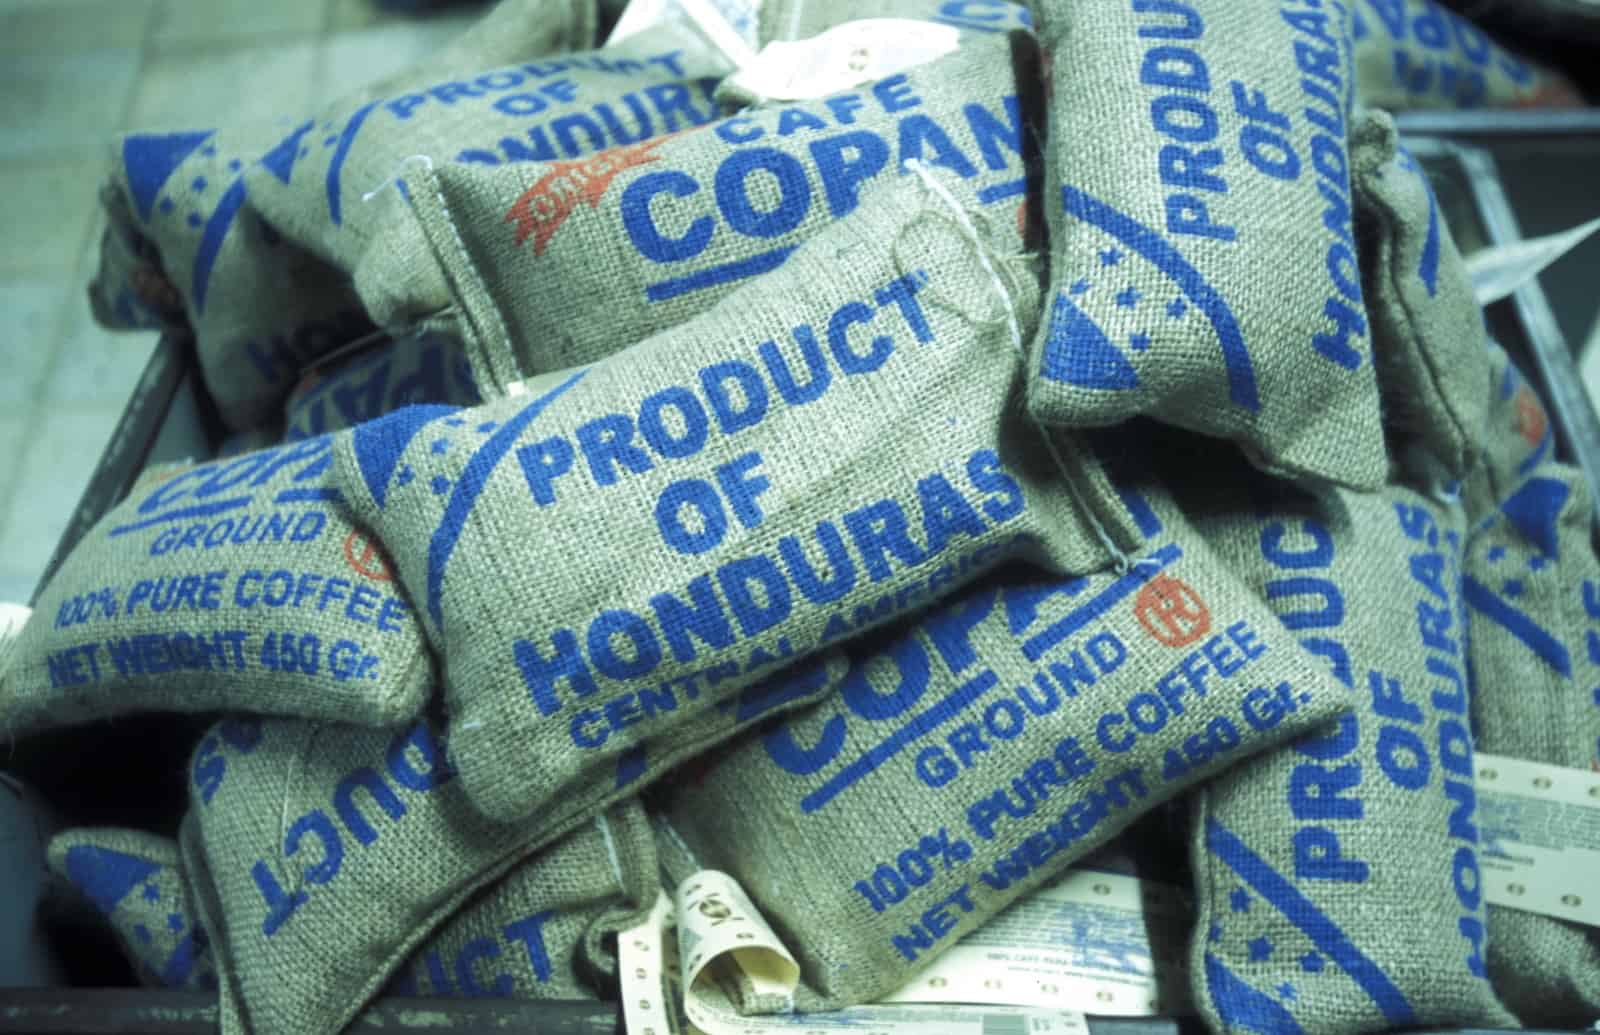 coffee-bags-from-honduras